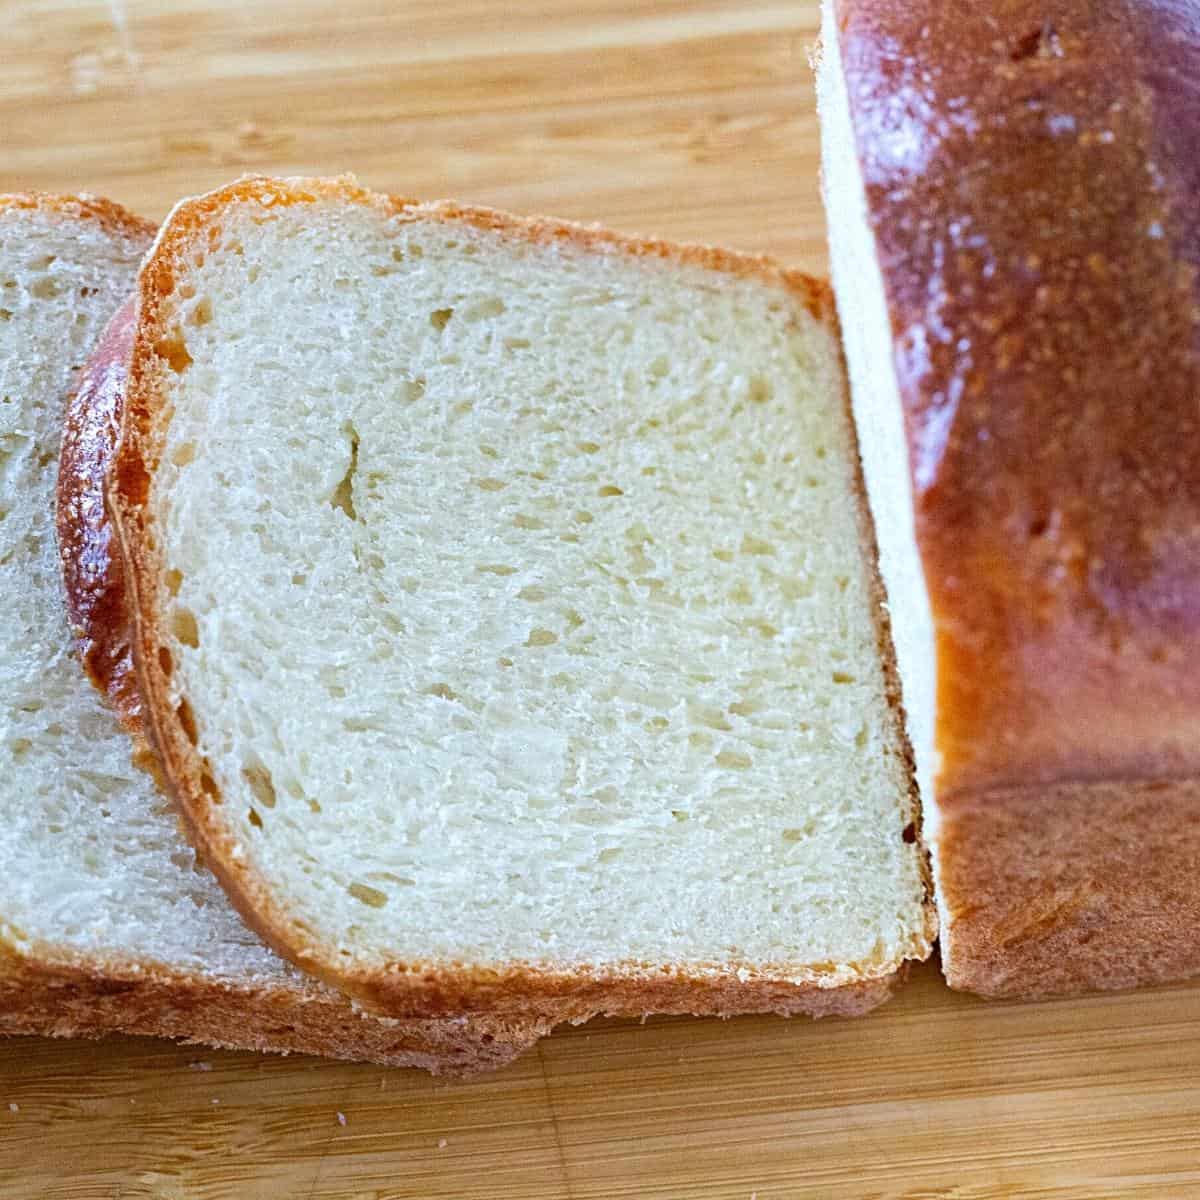 A slice of sourdough bread on the wooden board.